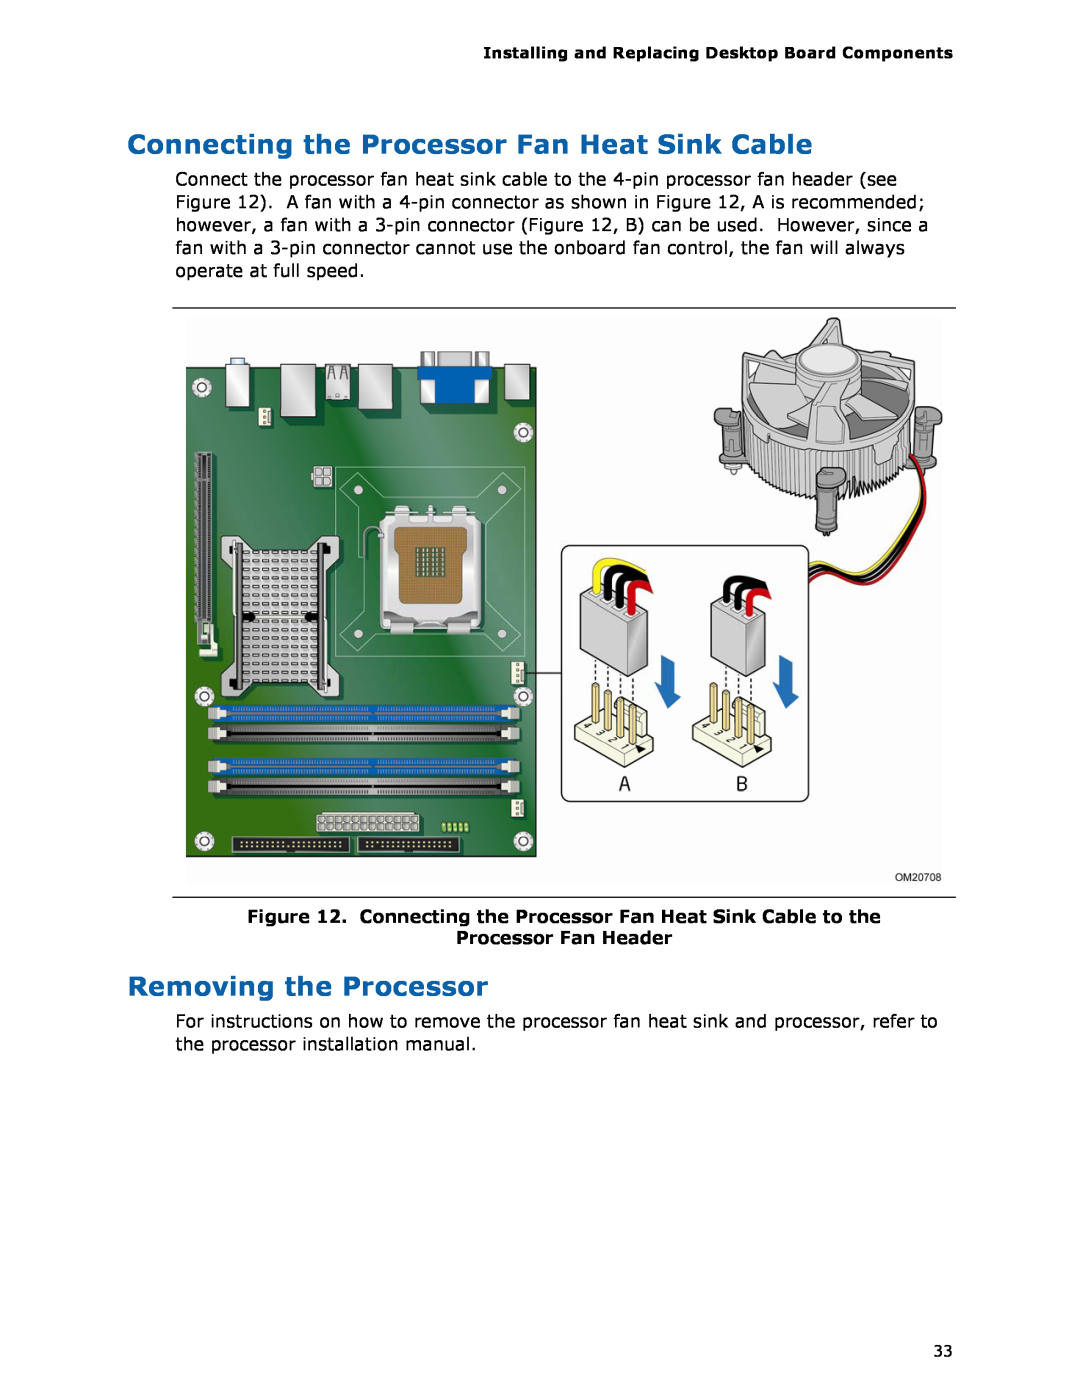 Intel DG35EC manual Connecting the Processor Fan Heat Sink Cable, Removing the Processor, Processor Fan Header 